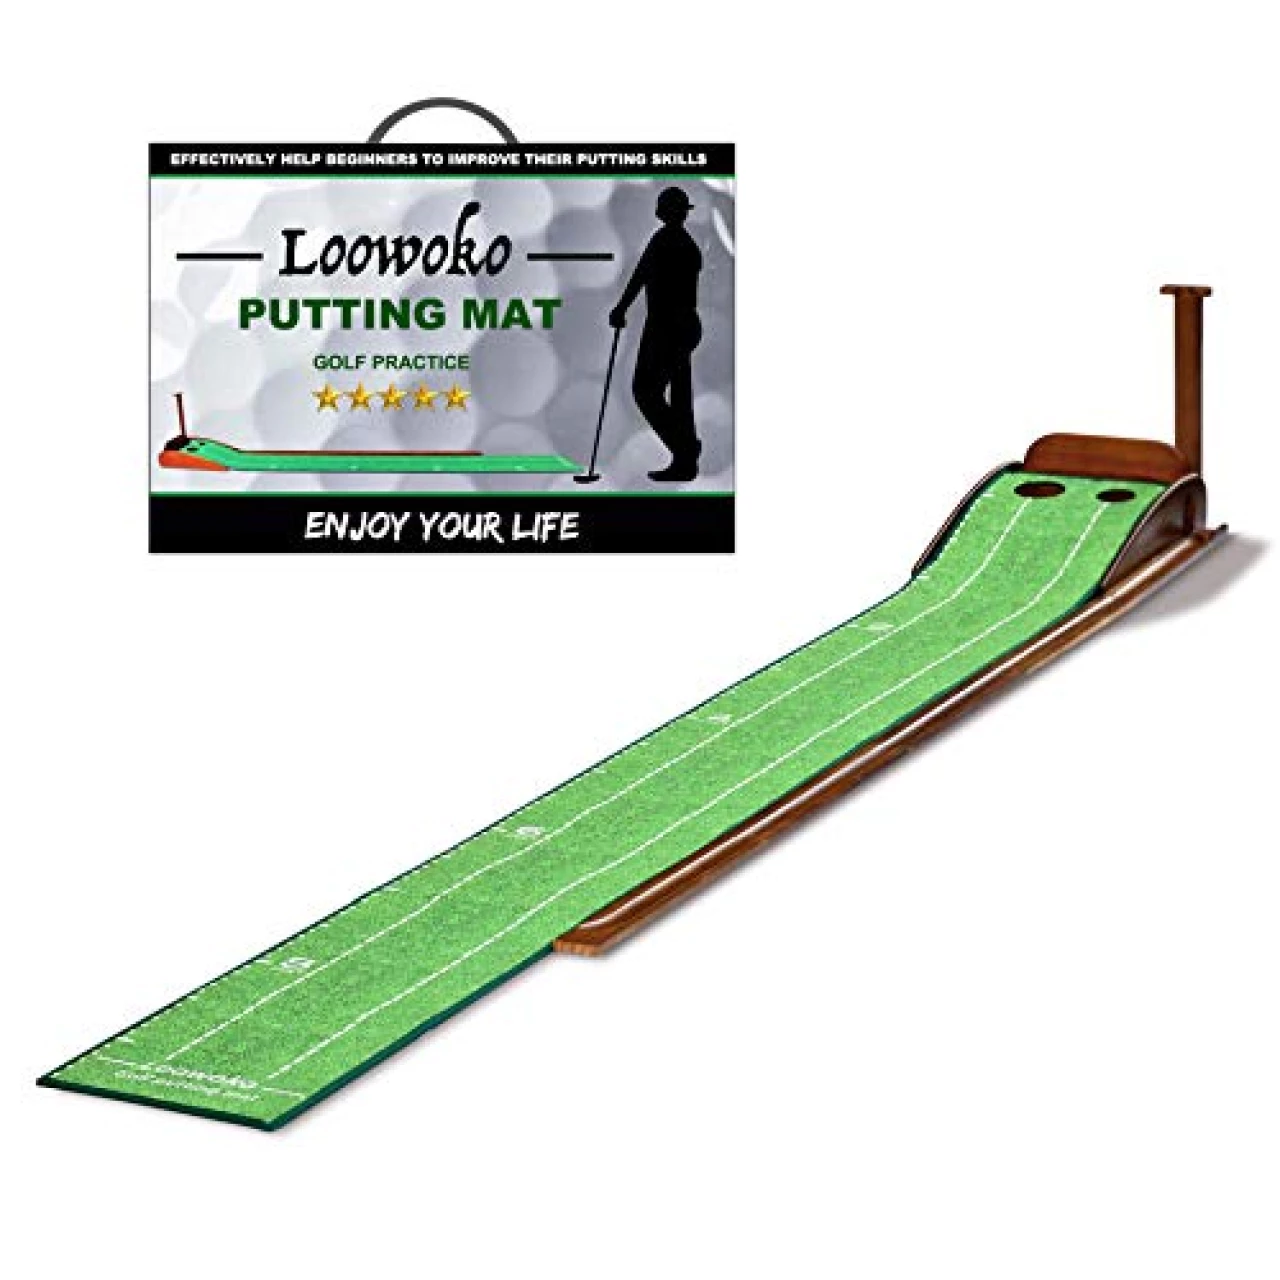 Loowoko Indoor Putting Green with Ball Return, Golf Practice Training Equipment Putting Mat